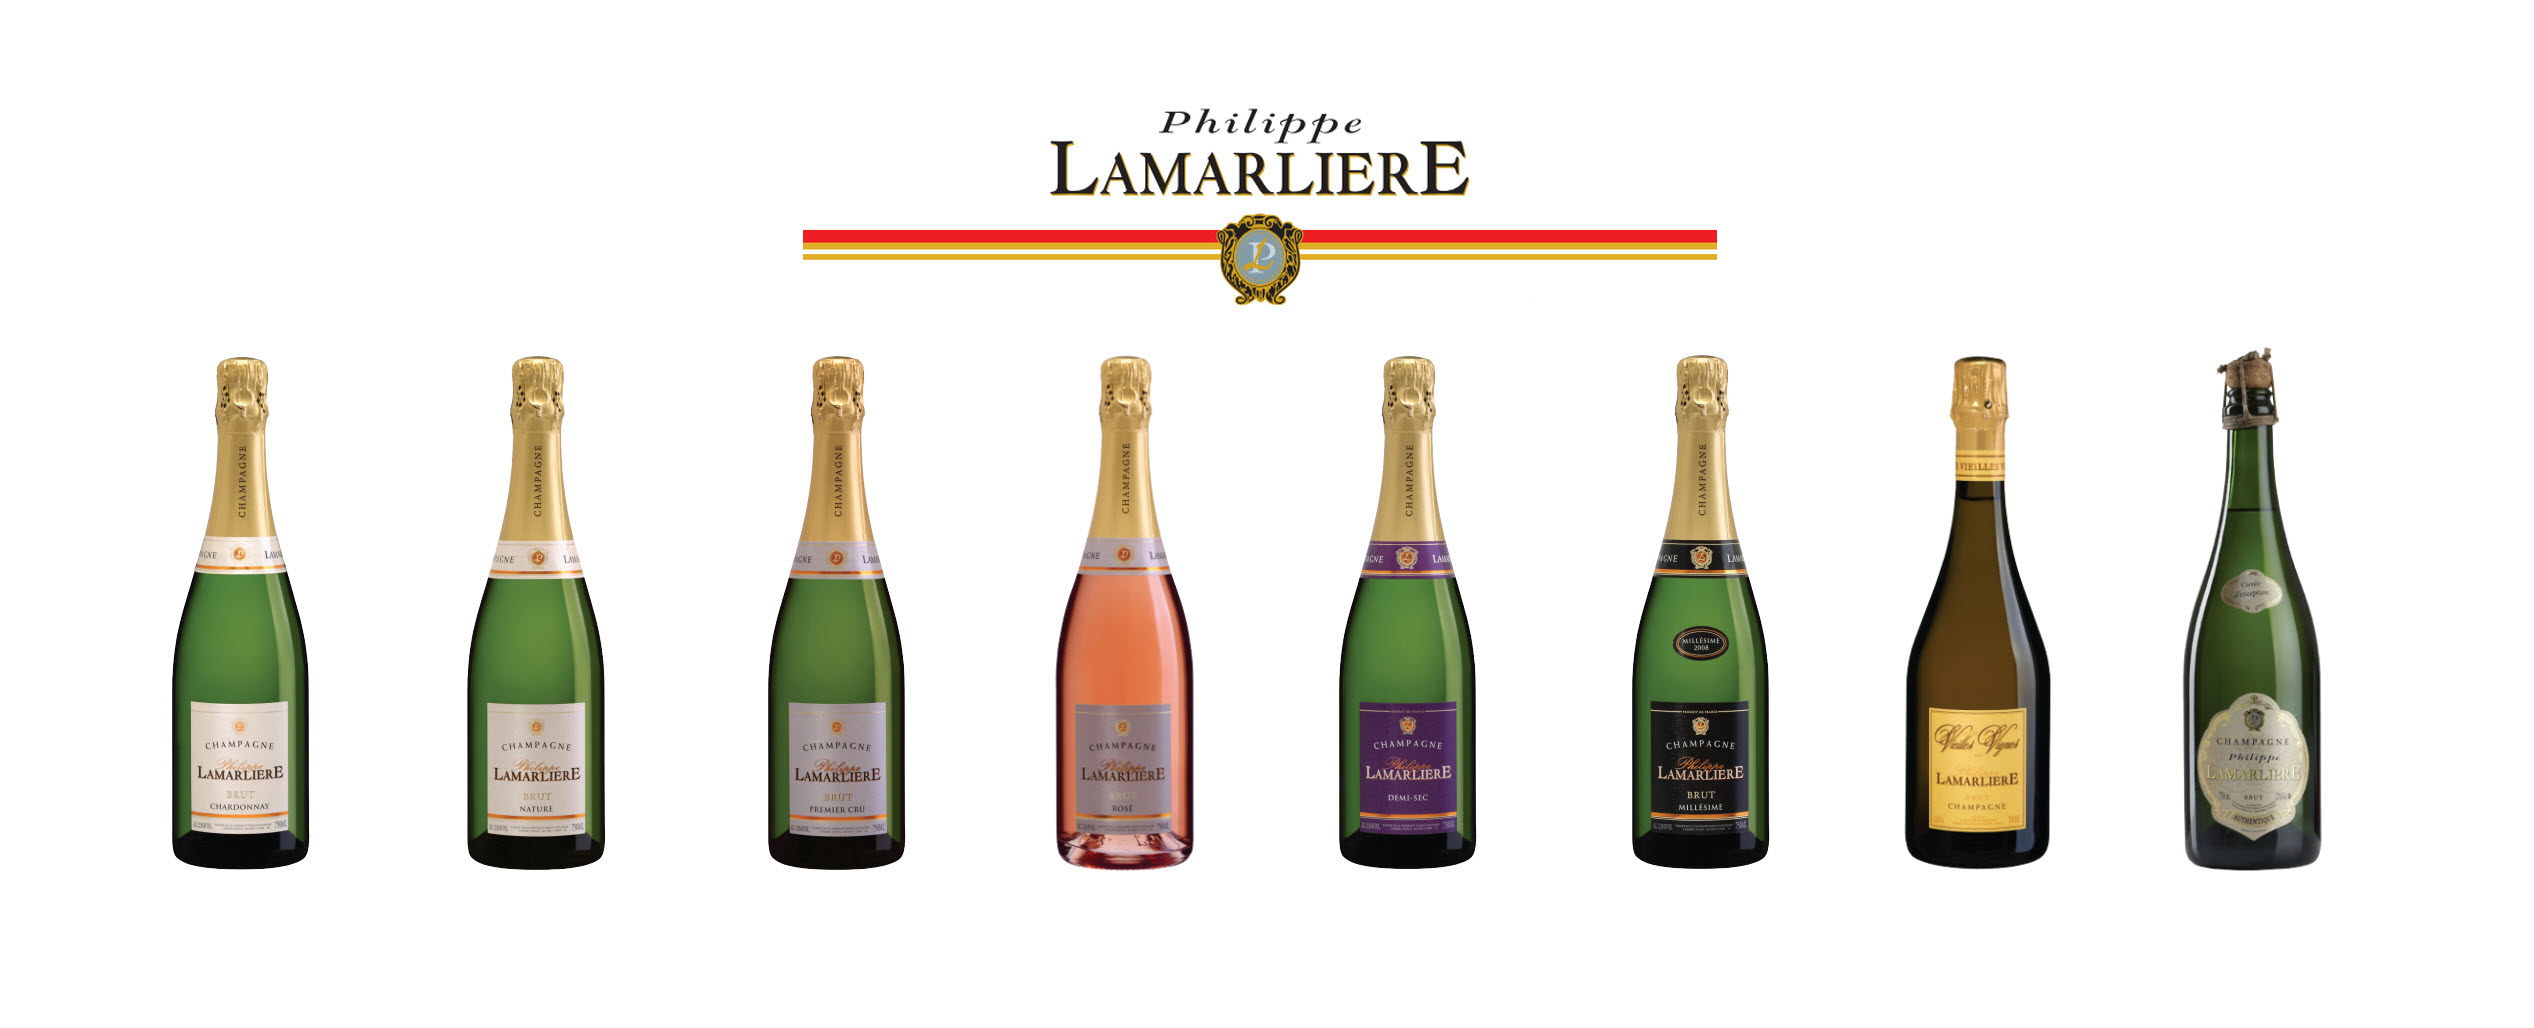 Champagne Philippe Lamarlière